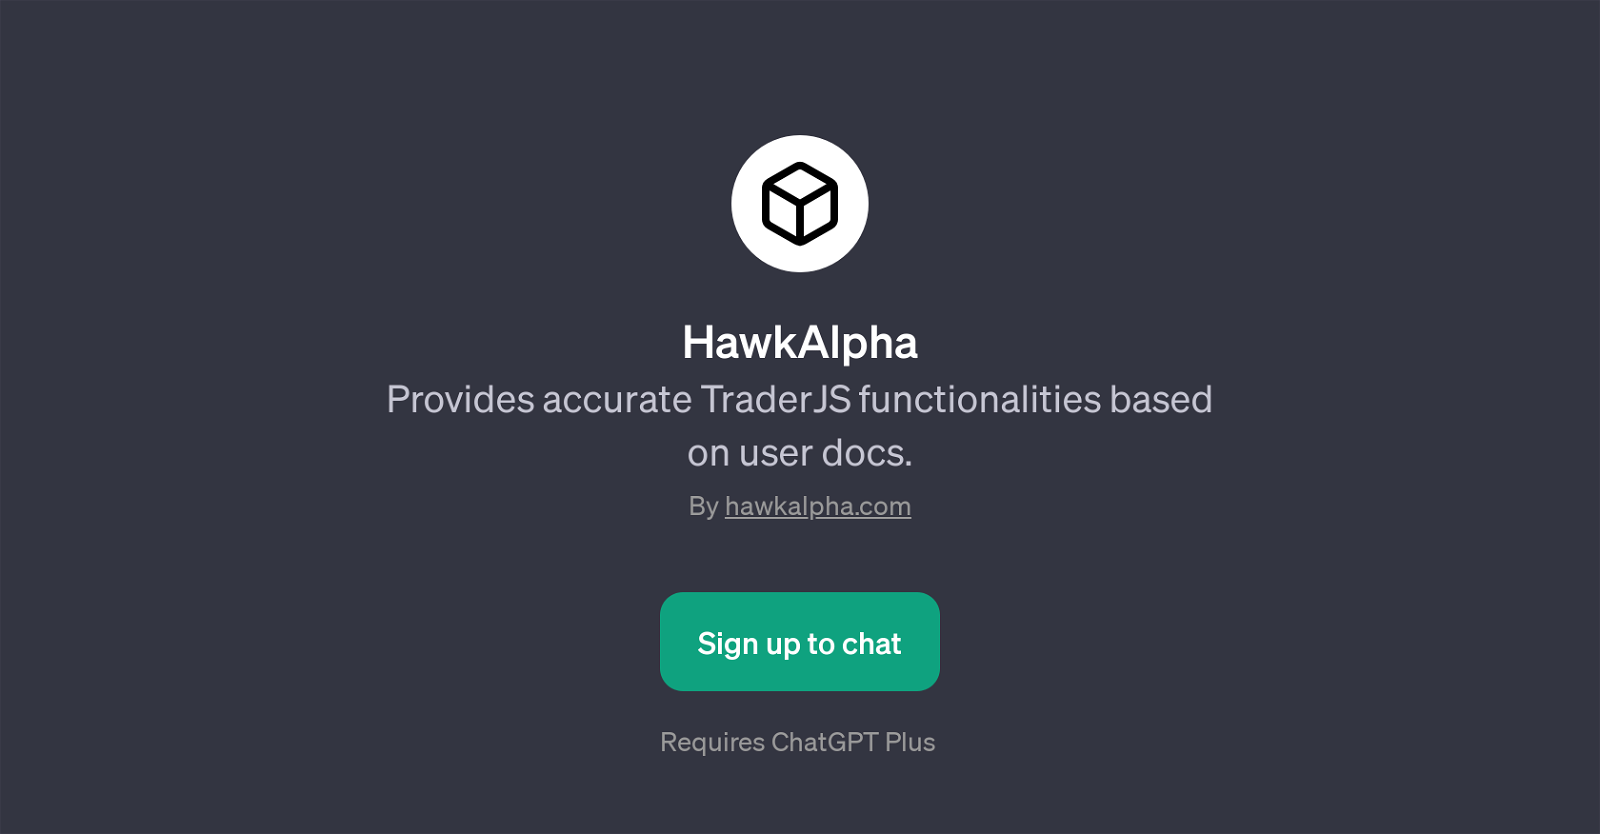 HawkAlpha website